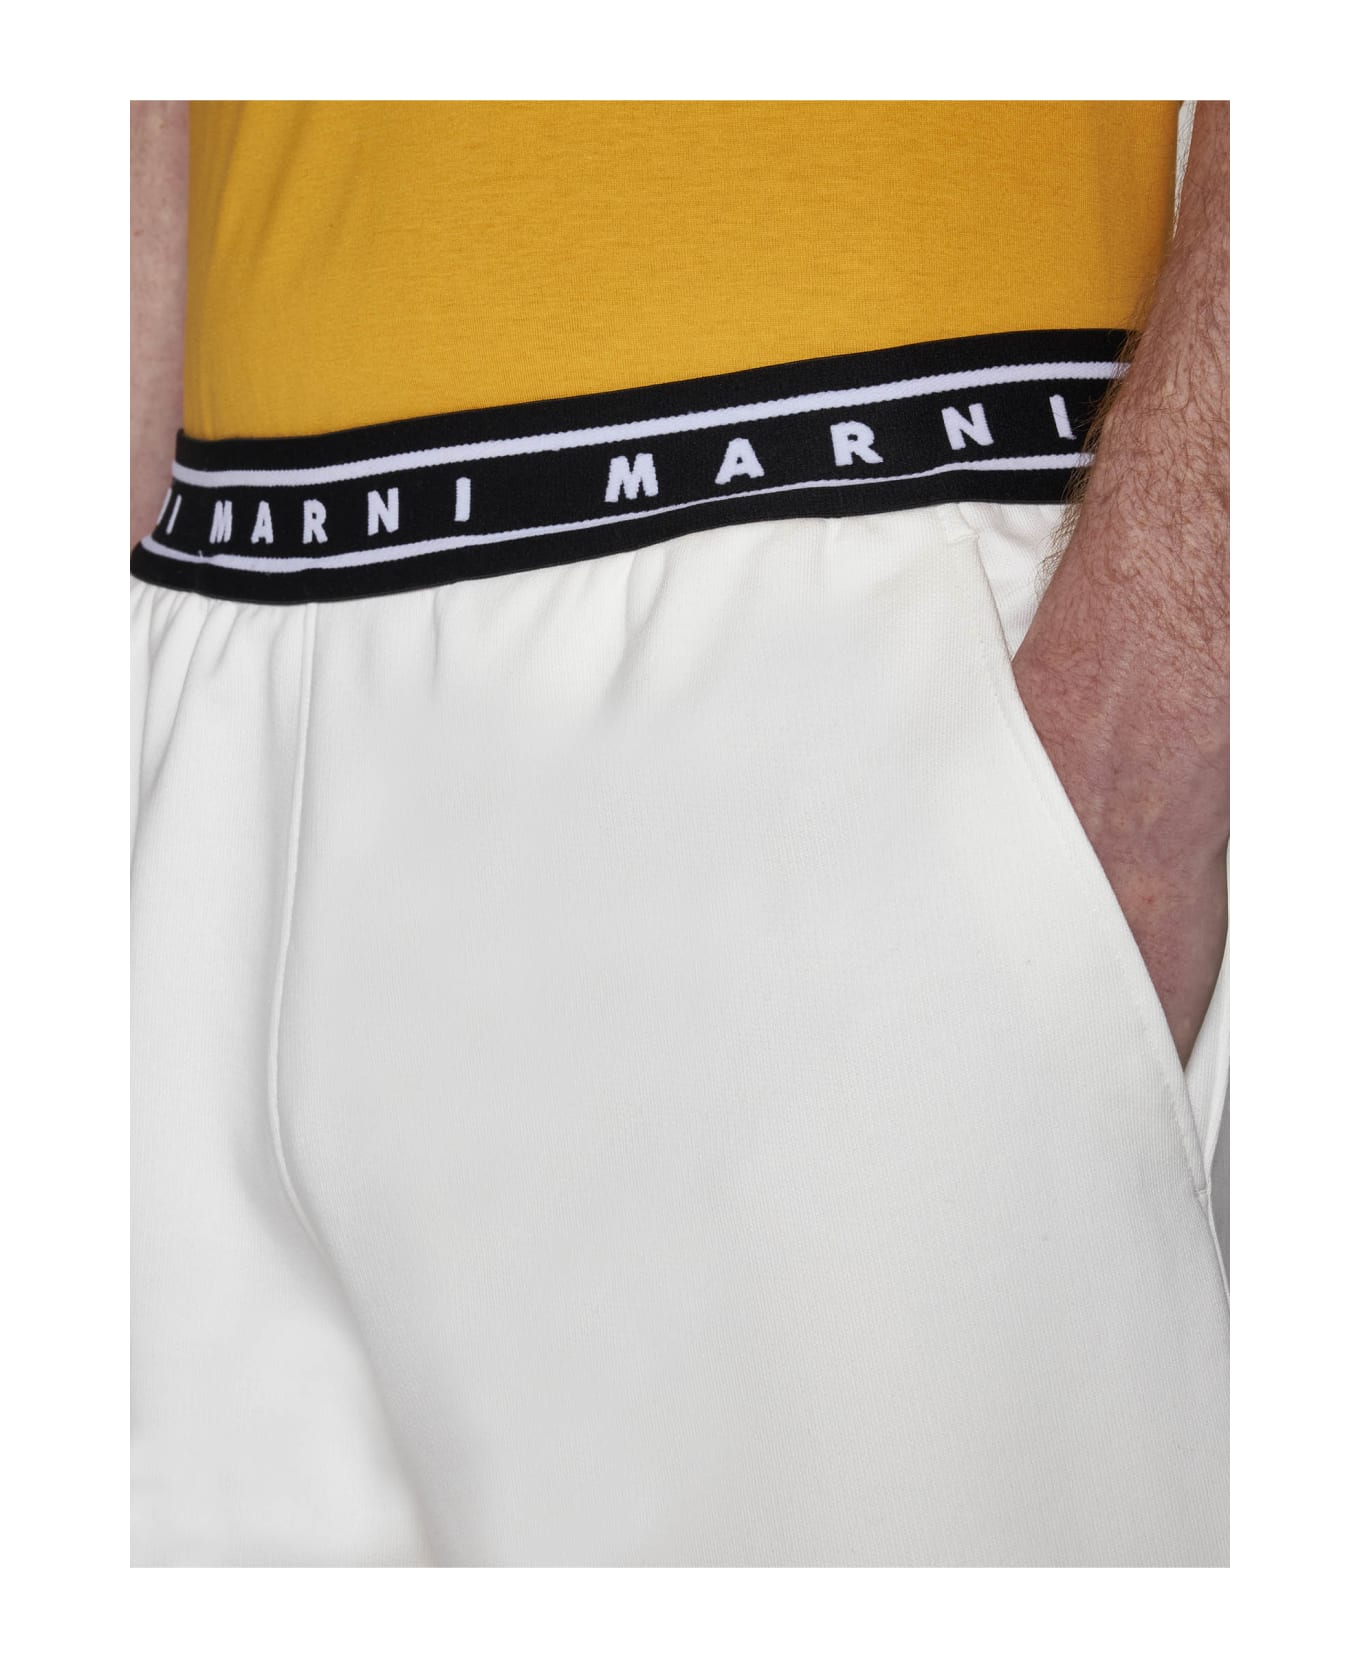 Marni Shorts - Natural white